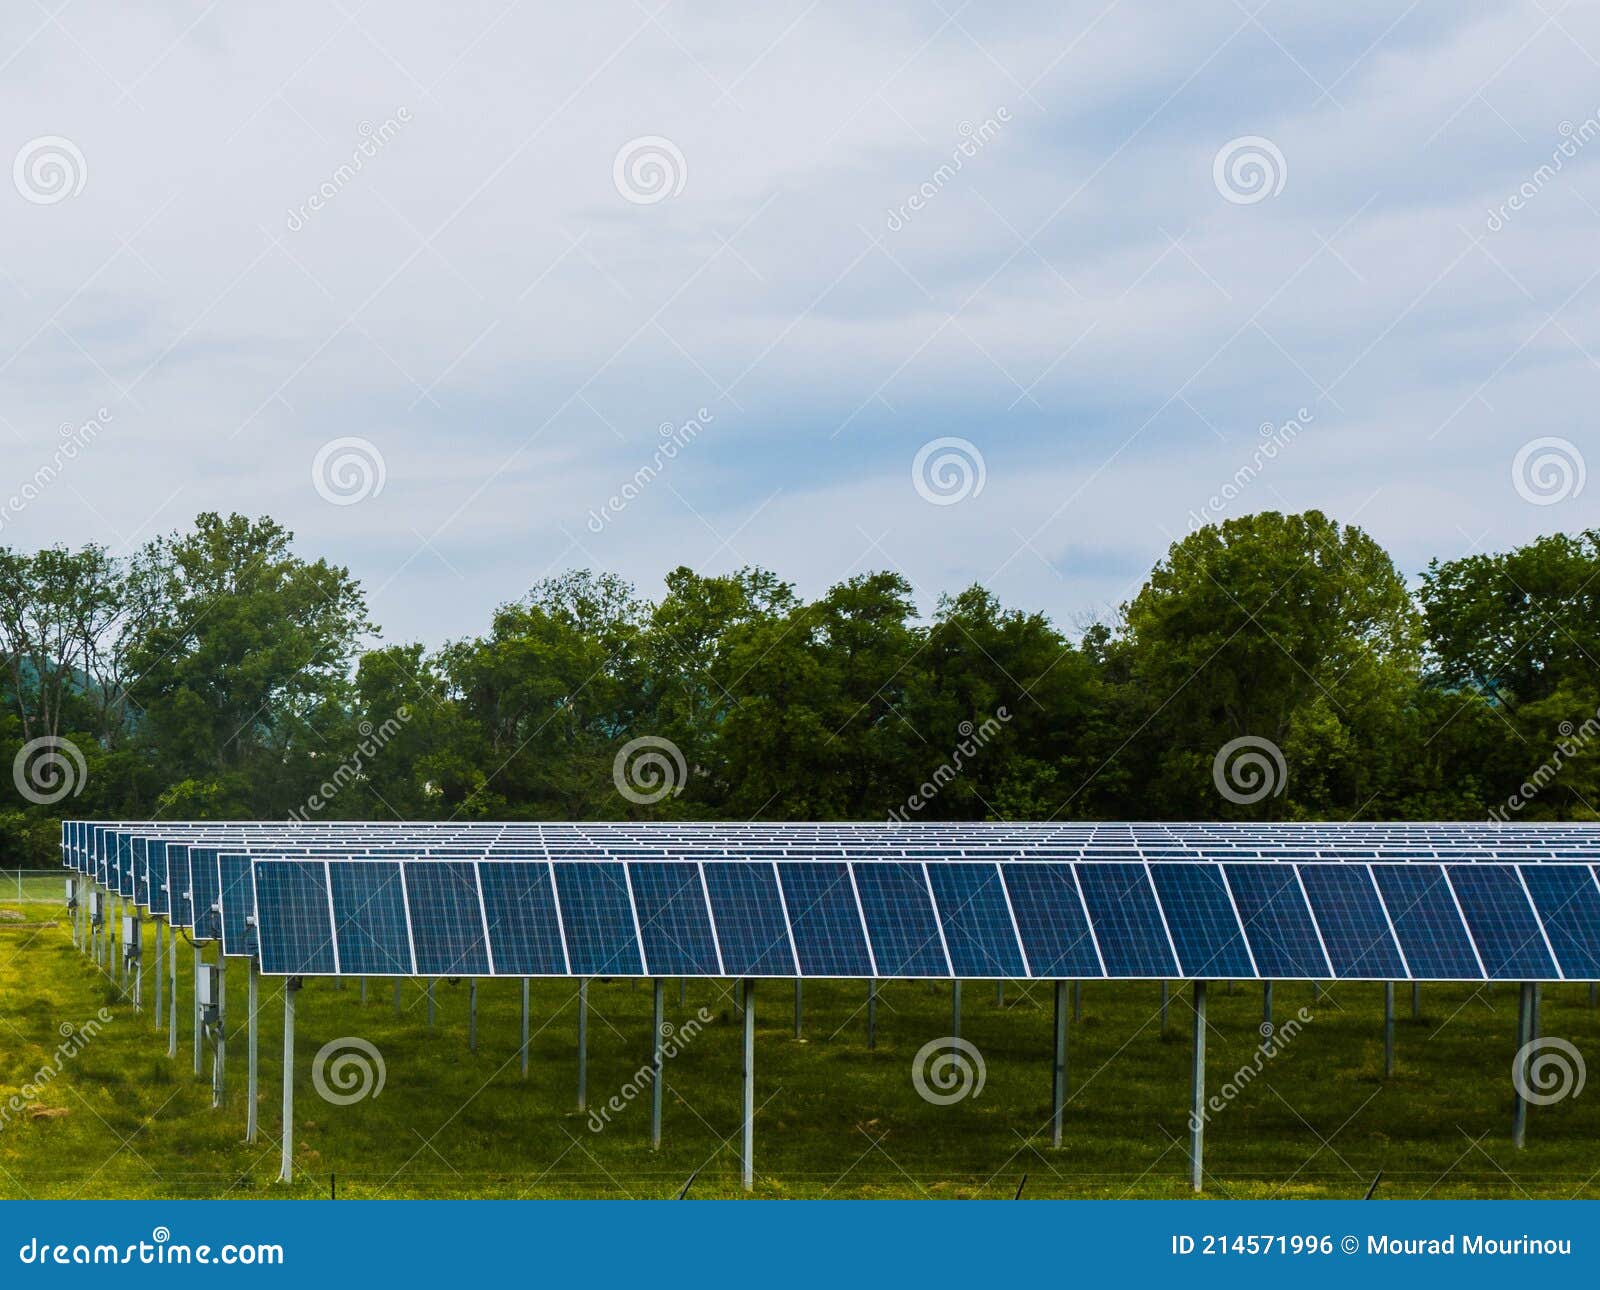 a set of solar panels.